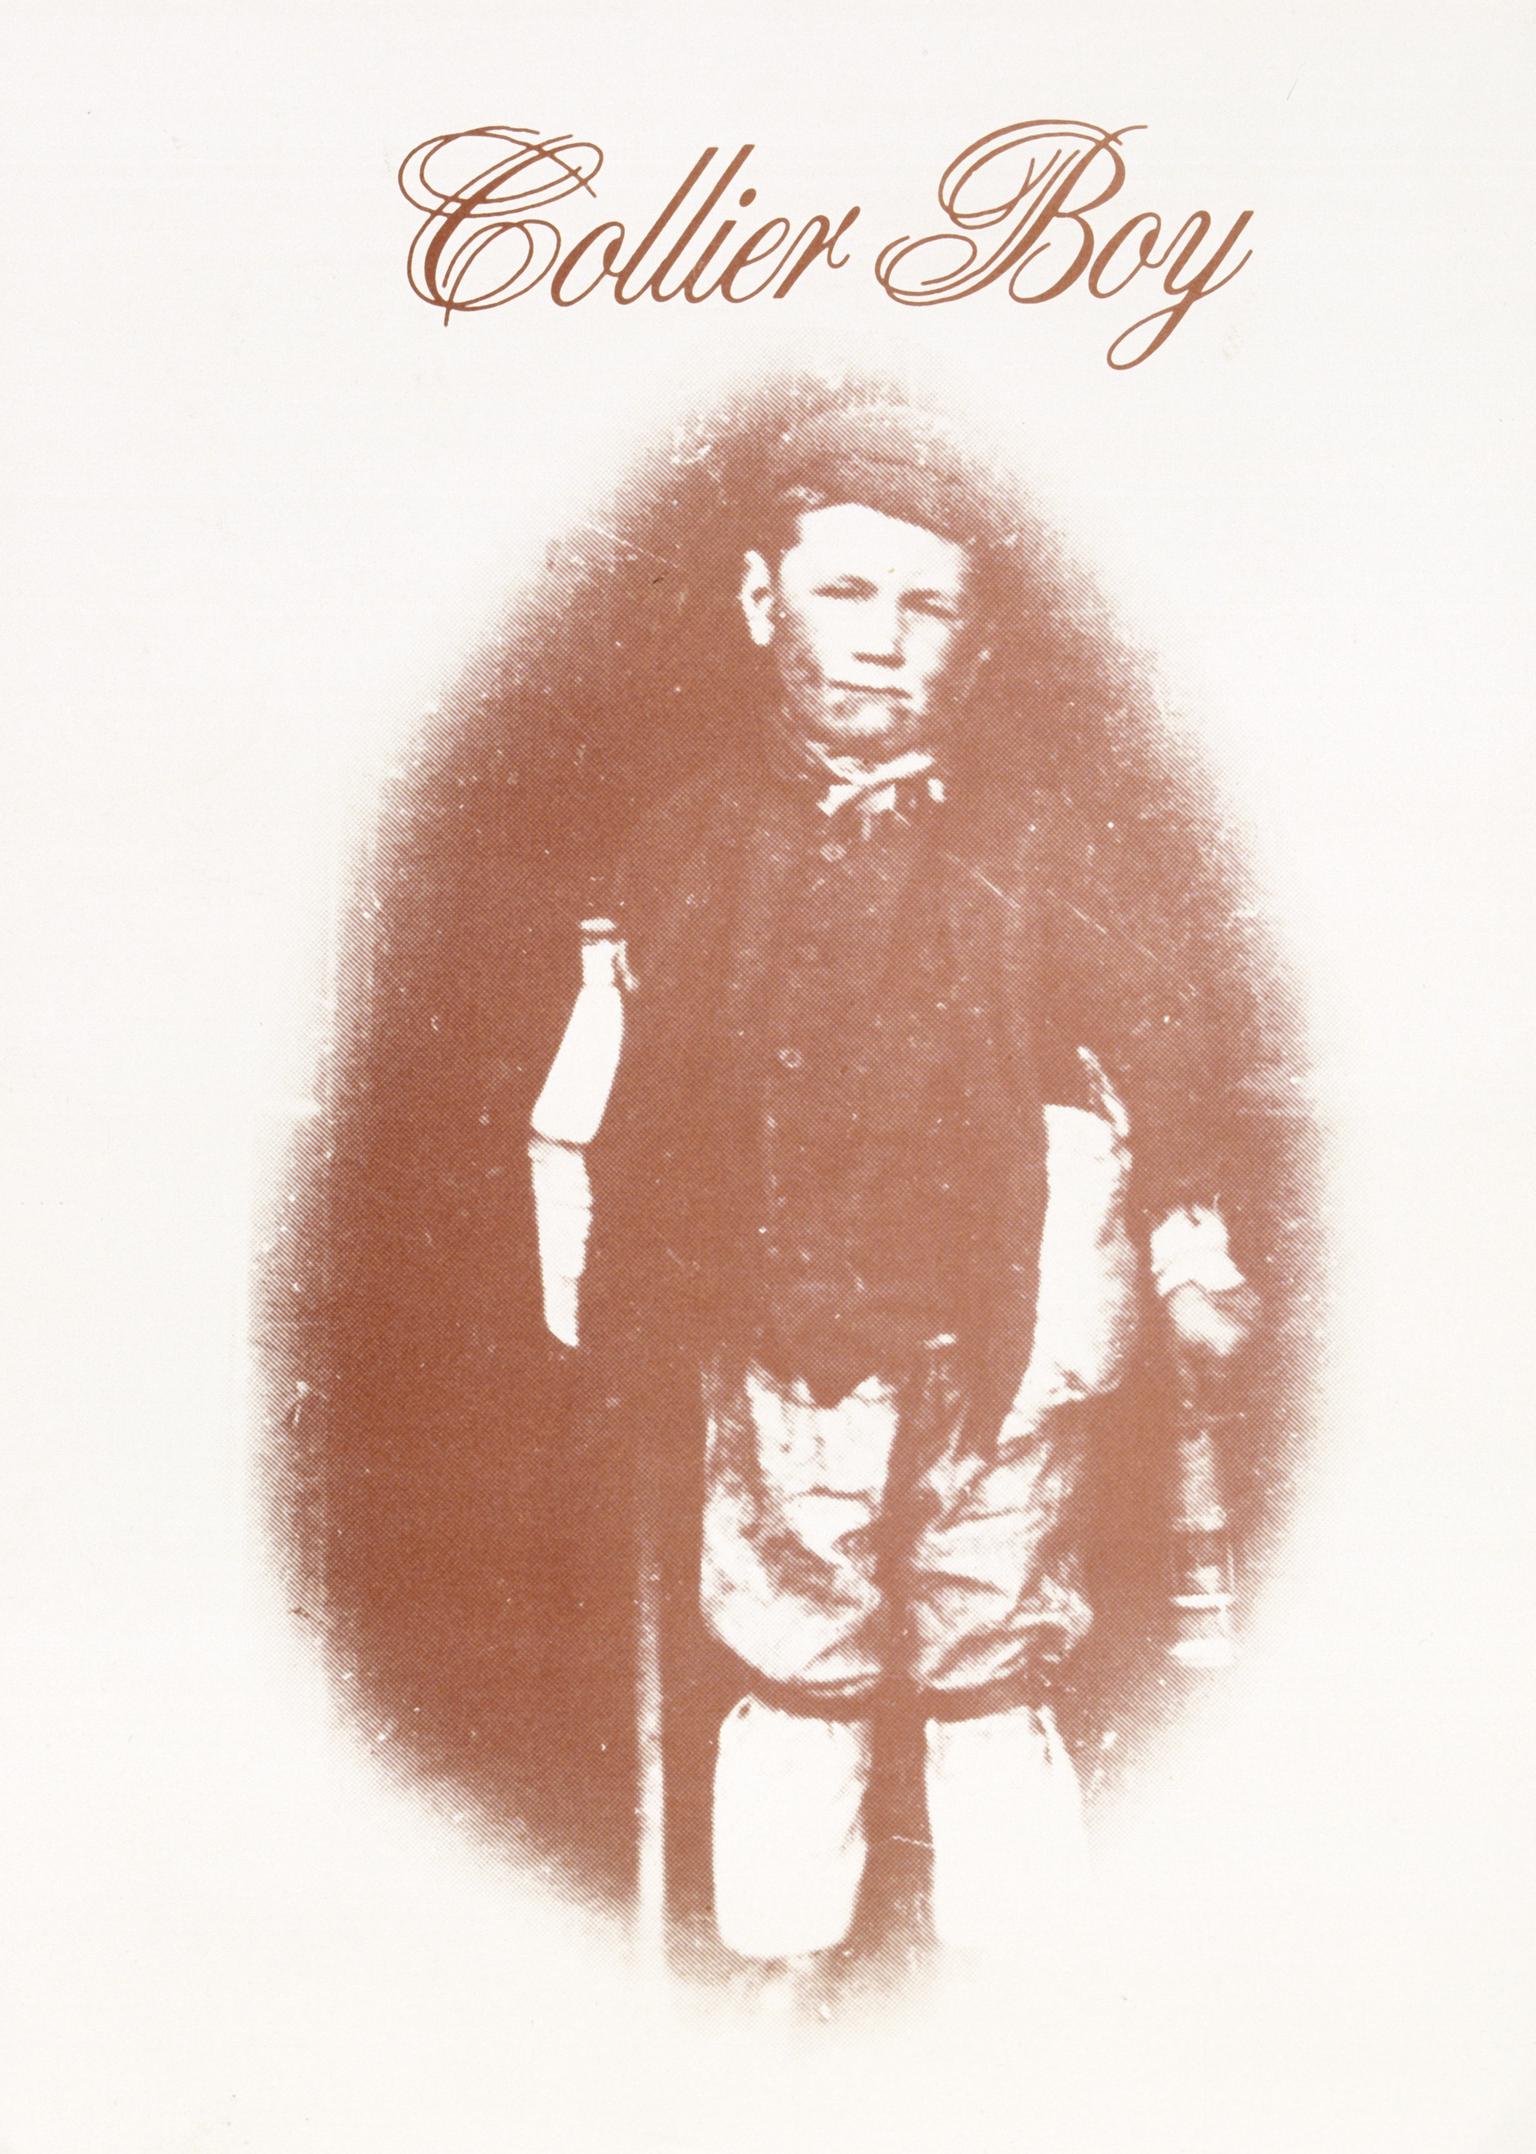 Collier Boy (postcard)